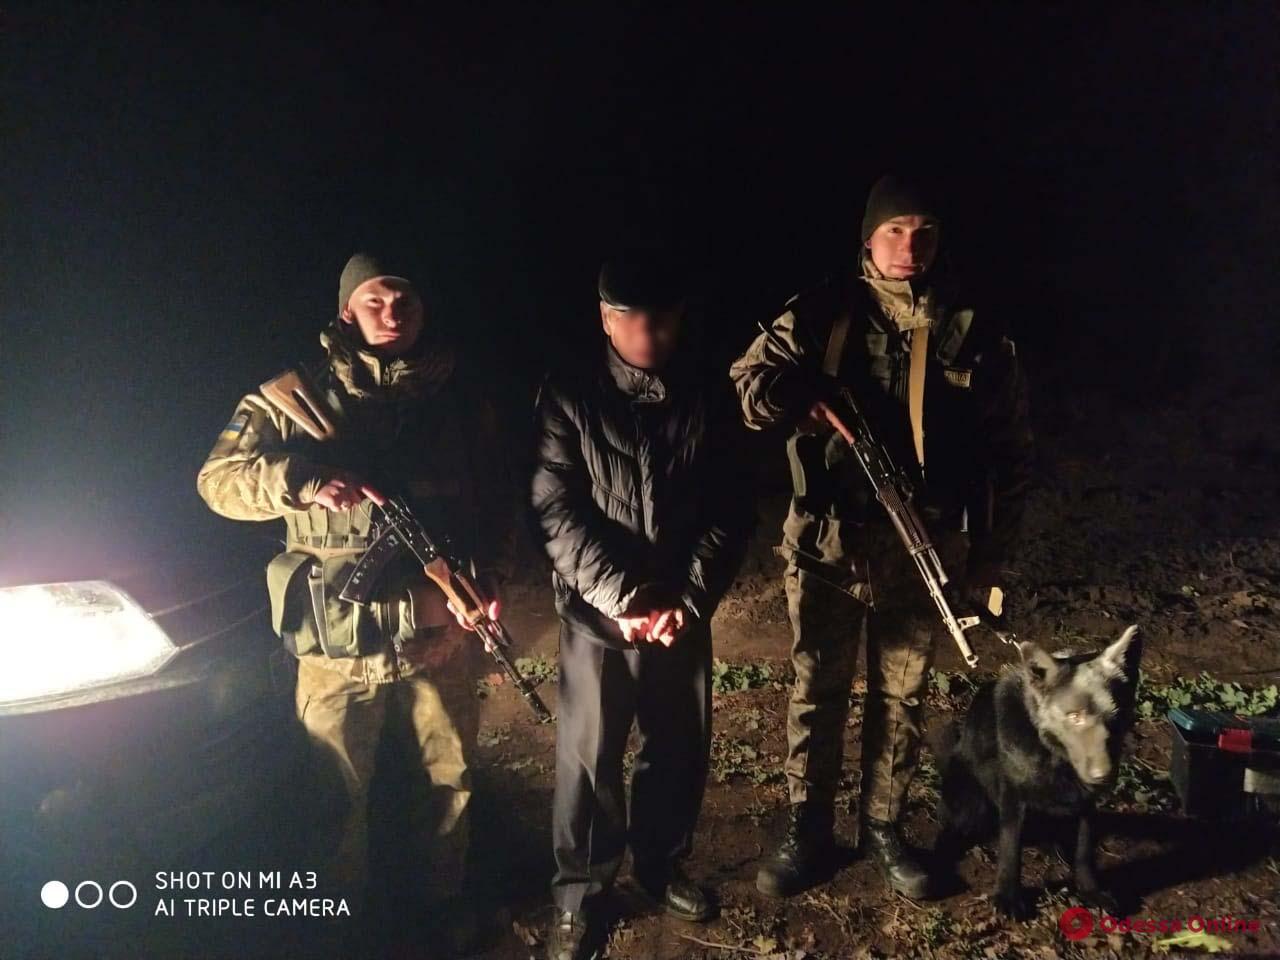 В Одесской области на границе поймали нелегала из ПМР